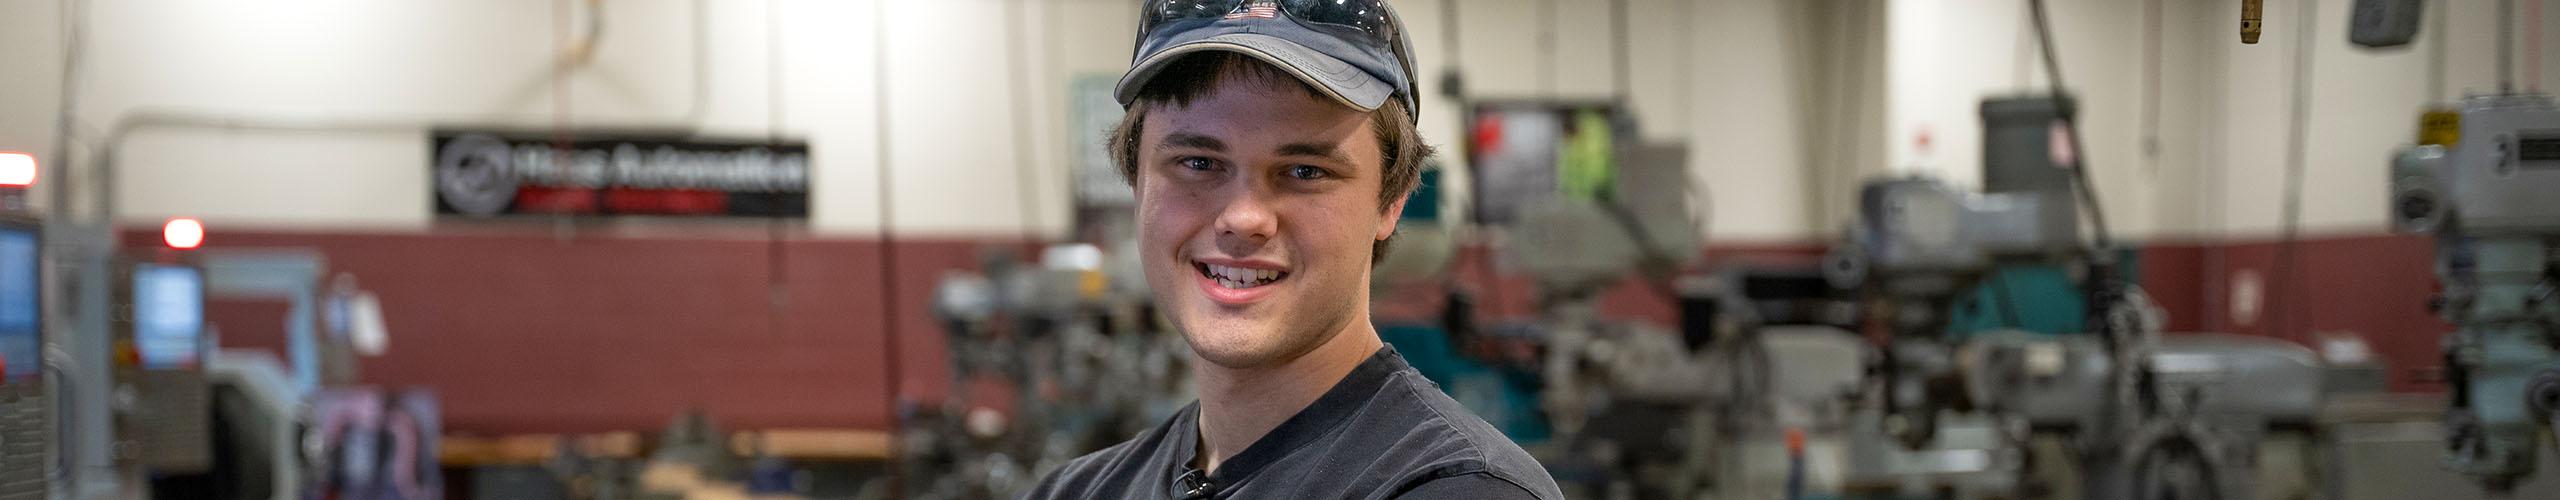 guy standing in workshop smiling at Danville Community College